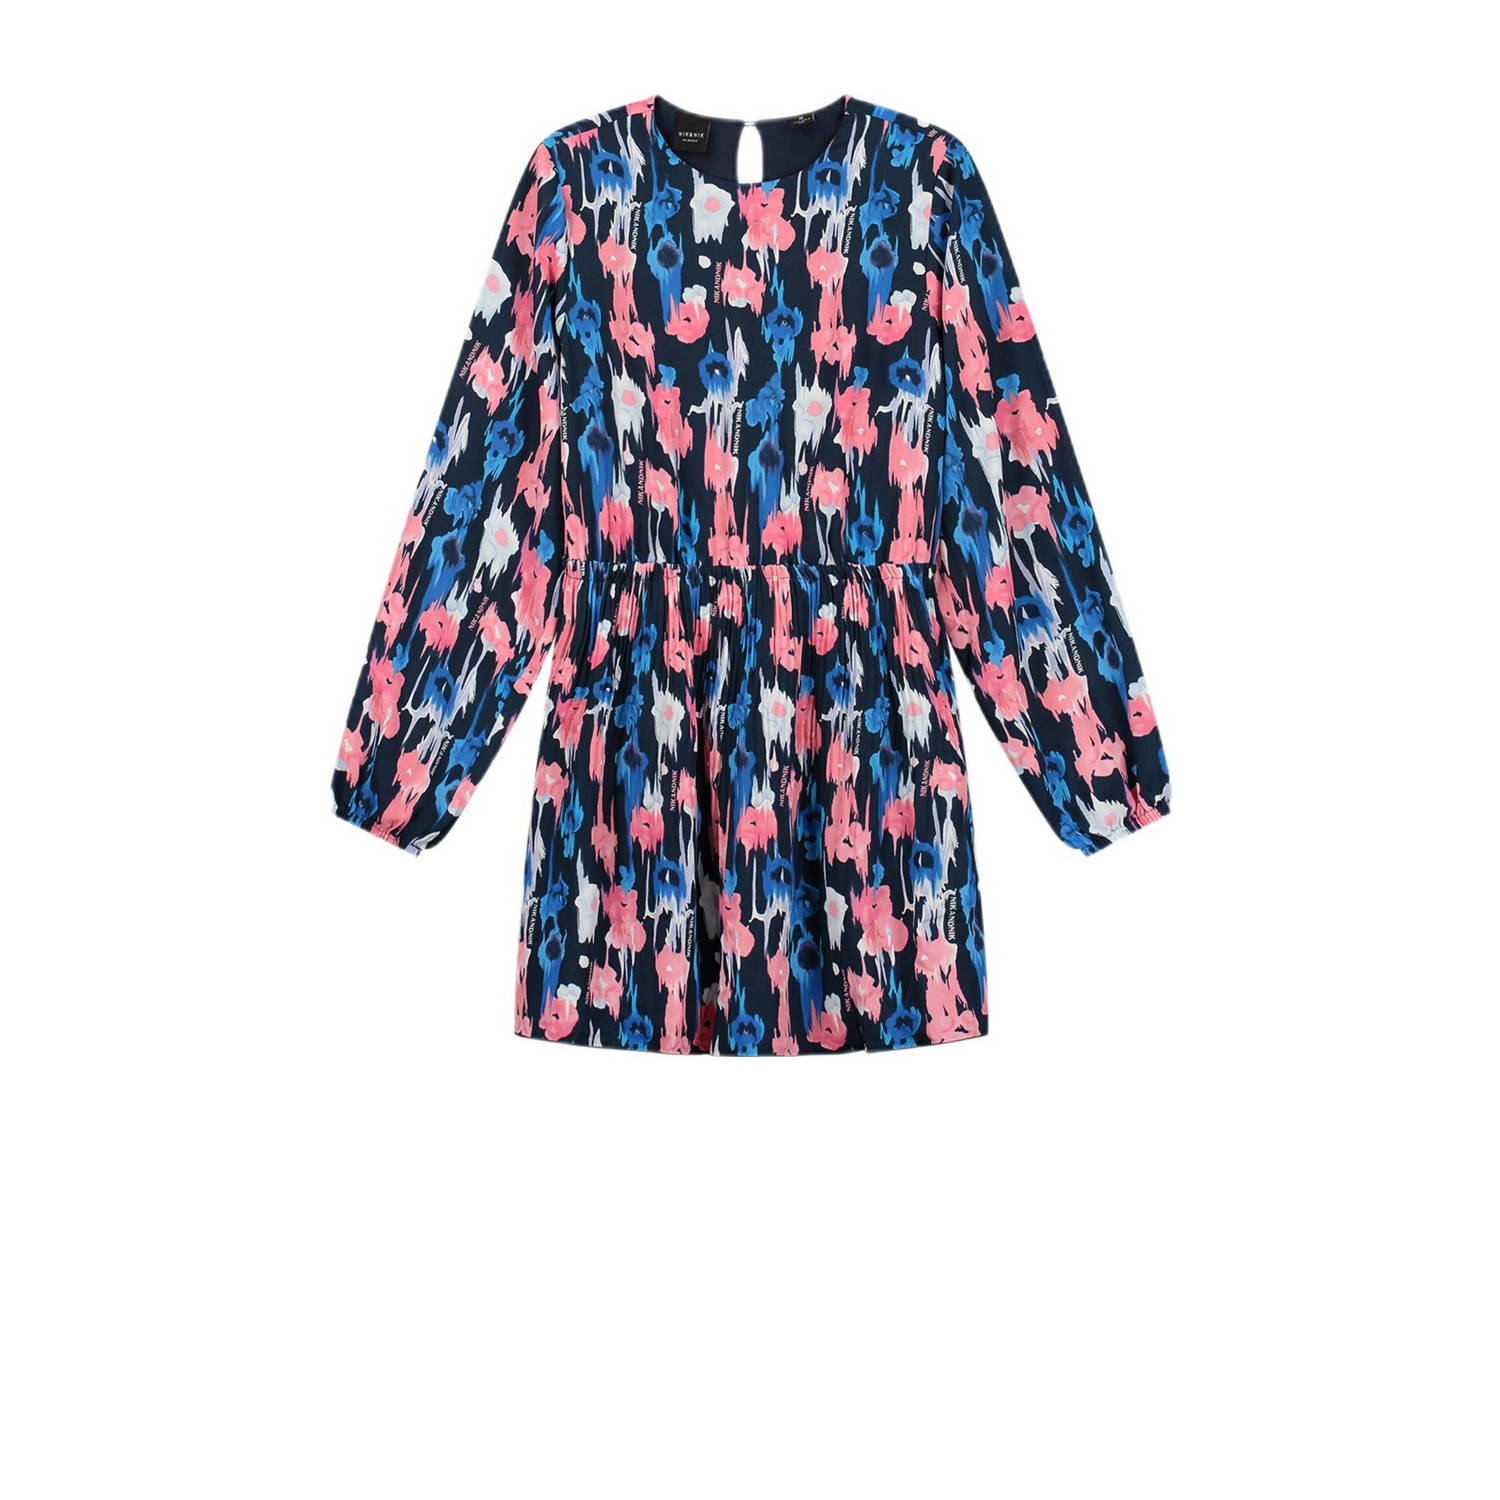 NIK&NIK gebloemde jurk Kenley blauw roze wit Meisjes Gerecycled polyester Ronde hals 140